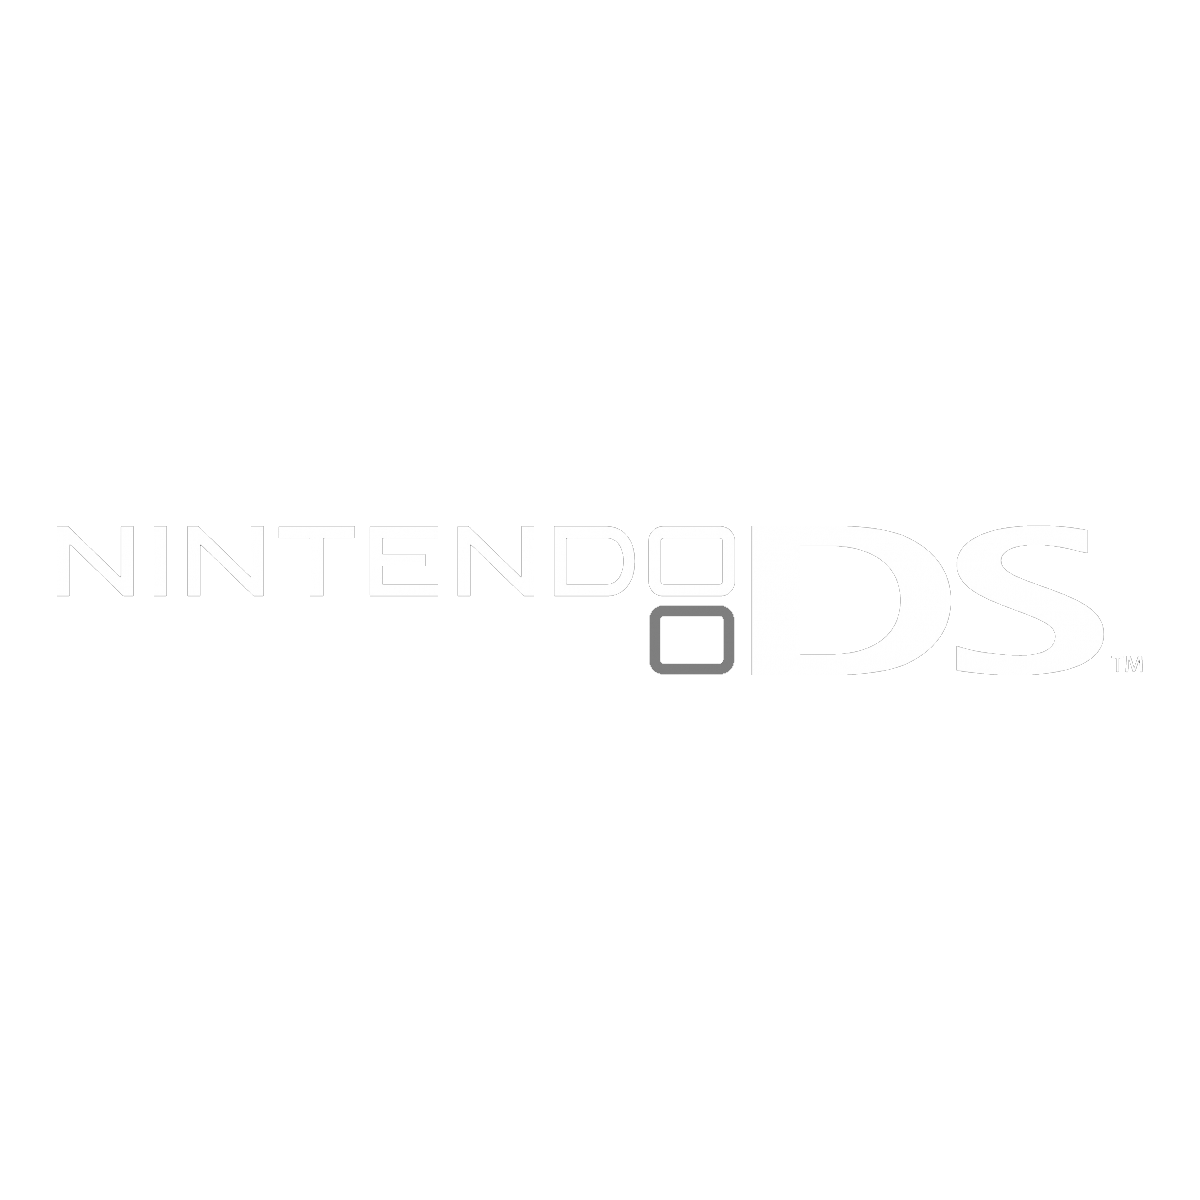 Descargar ROMs de Nintendo DS